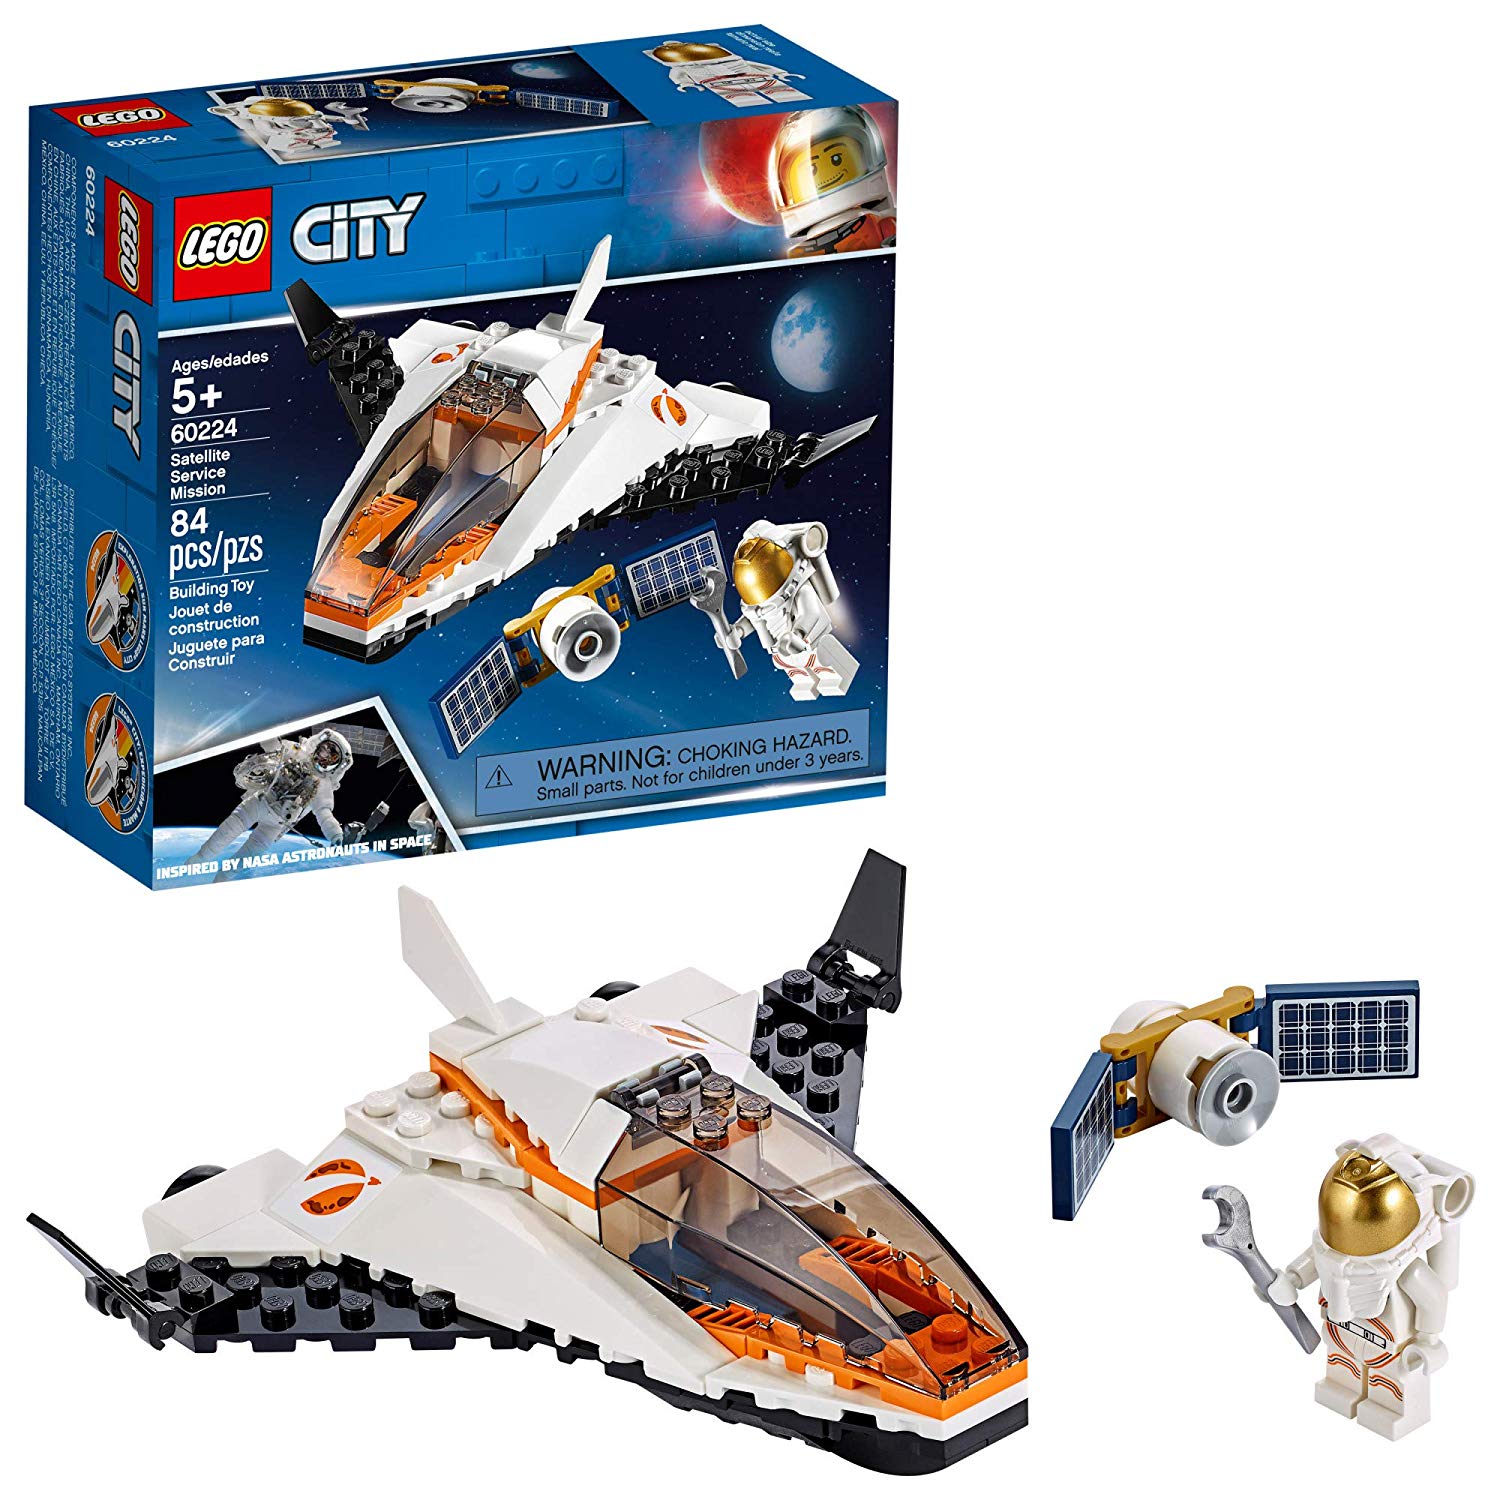 Lego City Space 60224 Satellite Mission (84 Pieces) - 2019